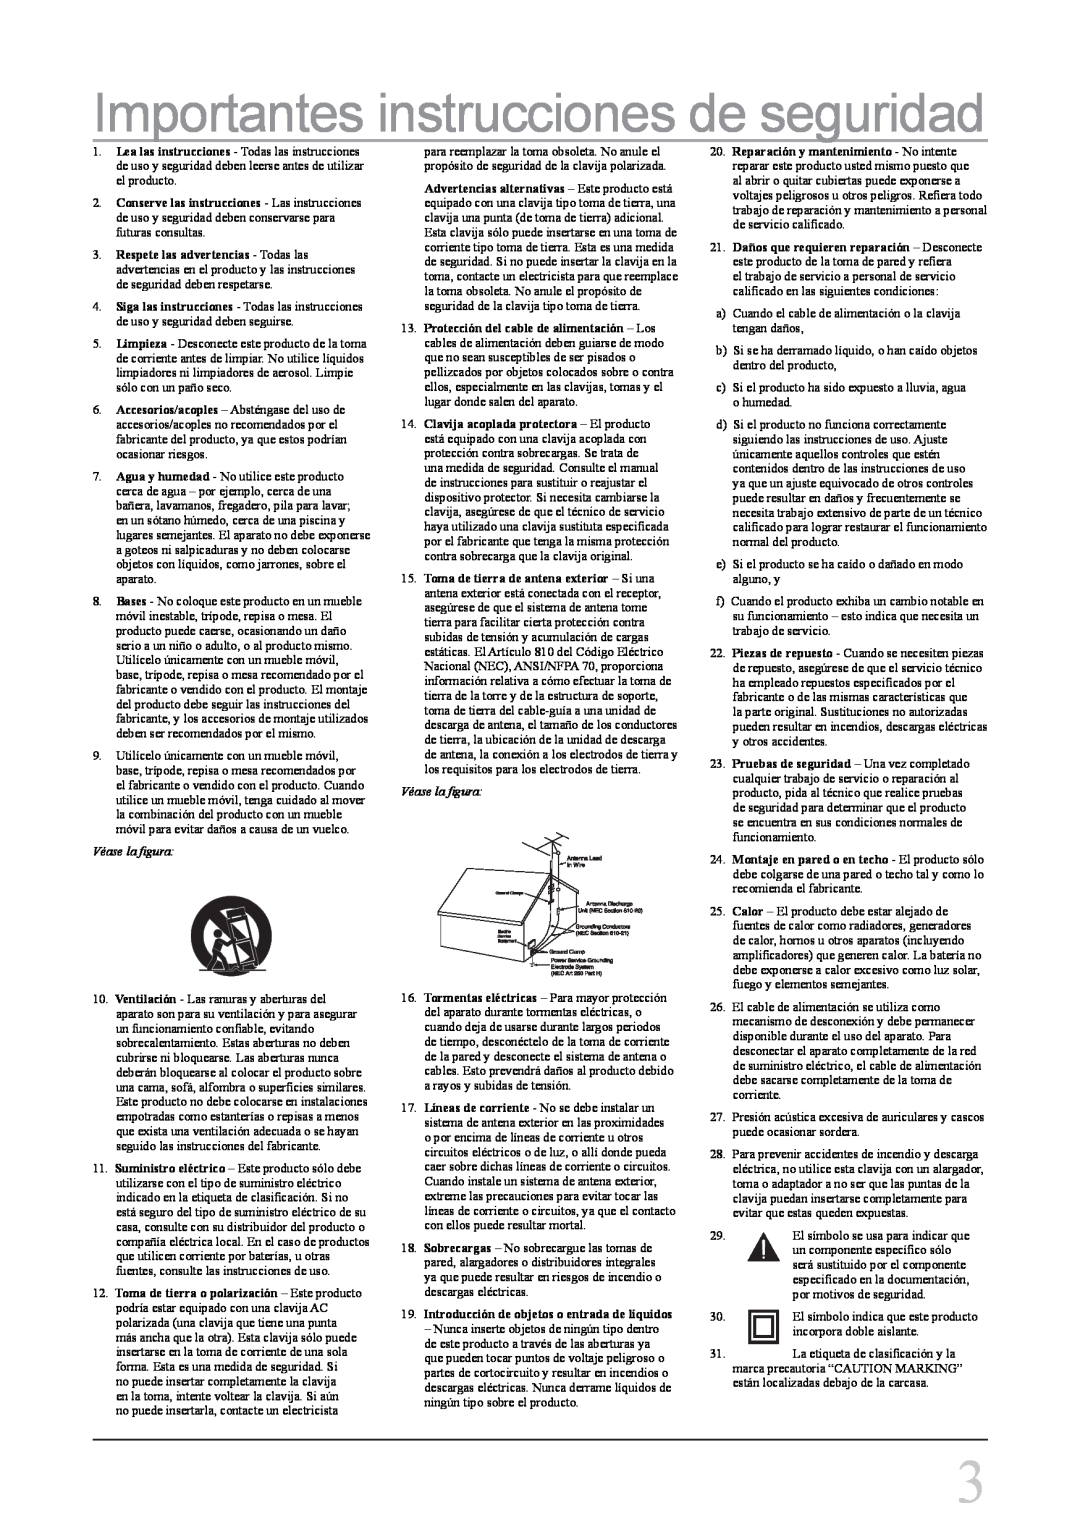 GPX PD708B manual Importantes instrucciones de seguridad, Véase la figura 